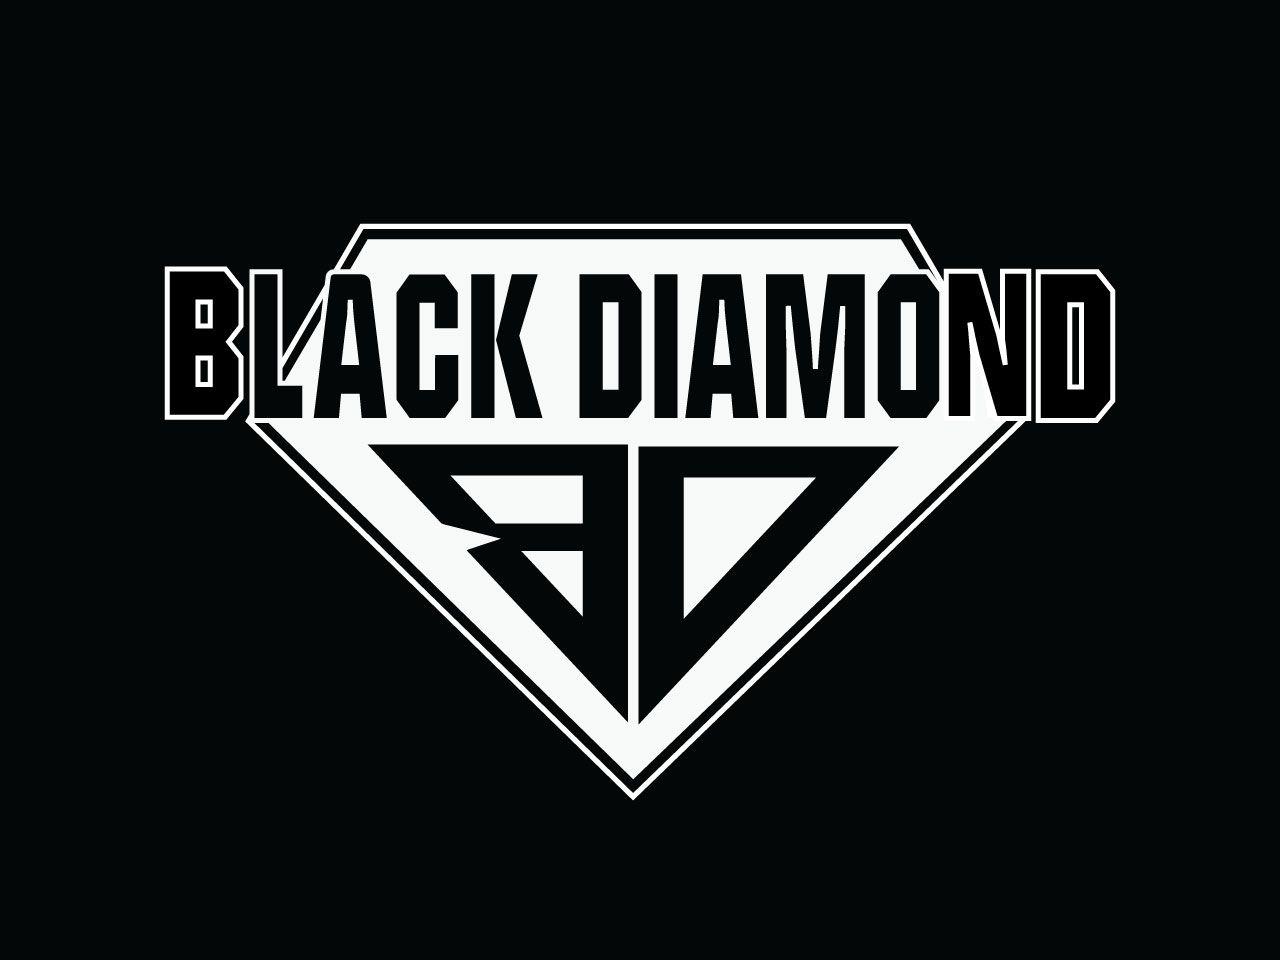 Black and White Diamond Clothing Logo - Black Diamond clothing store logo by Afzal uz zaman Shaju. Dribbble